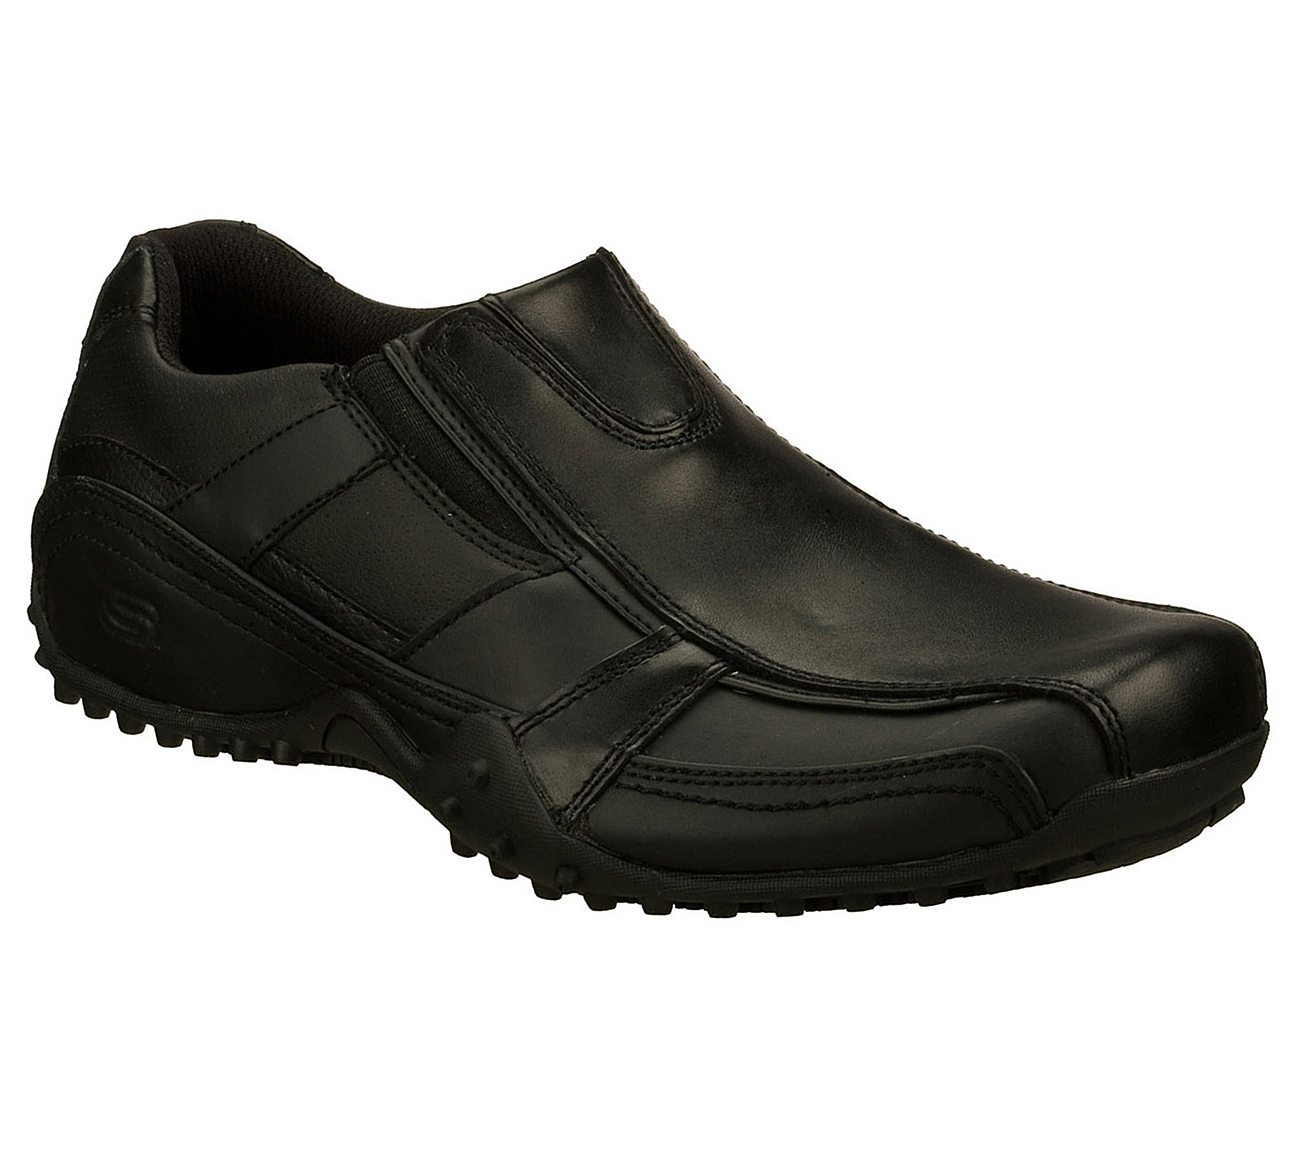 Buy SKECHERS Work: Rockland - Hooper SR Work Shoes